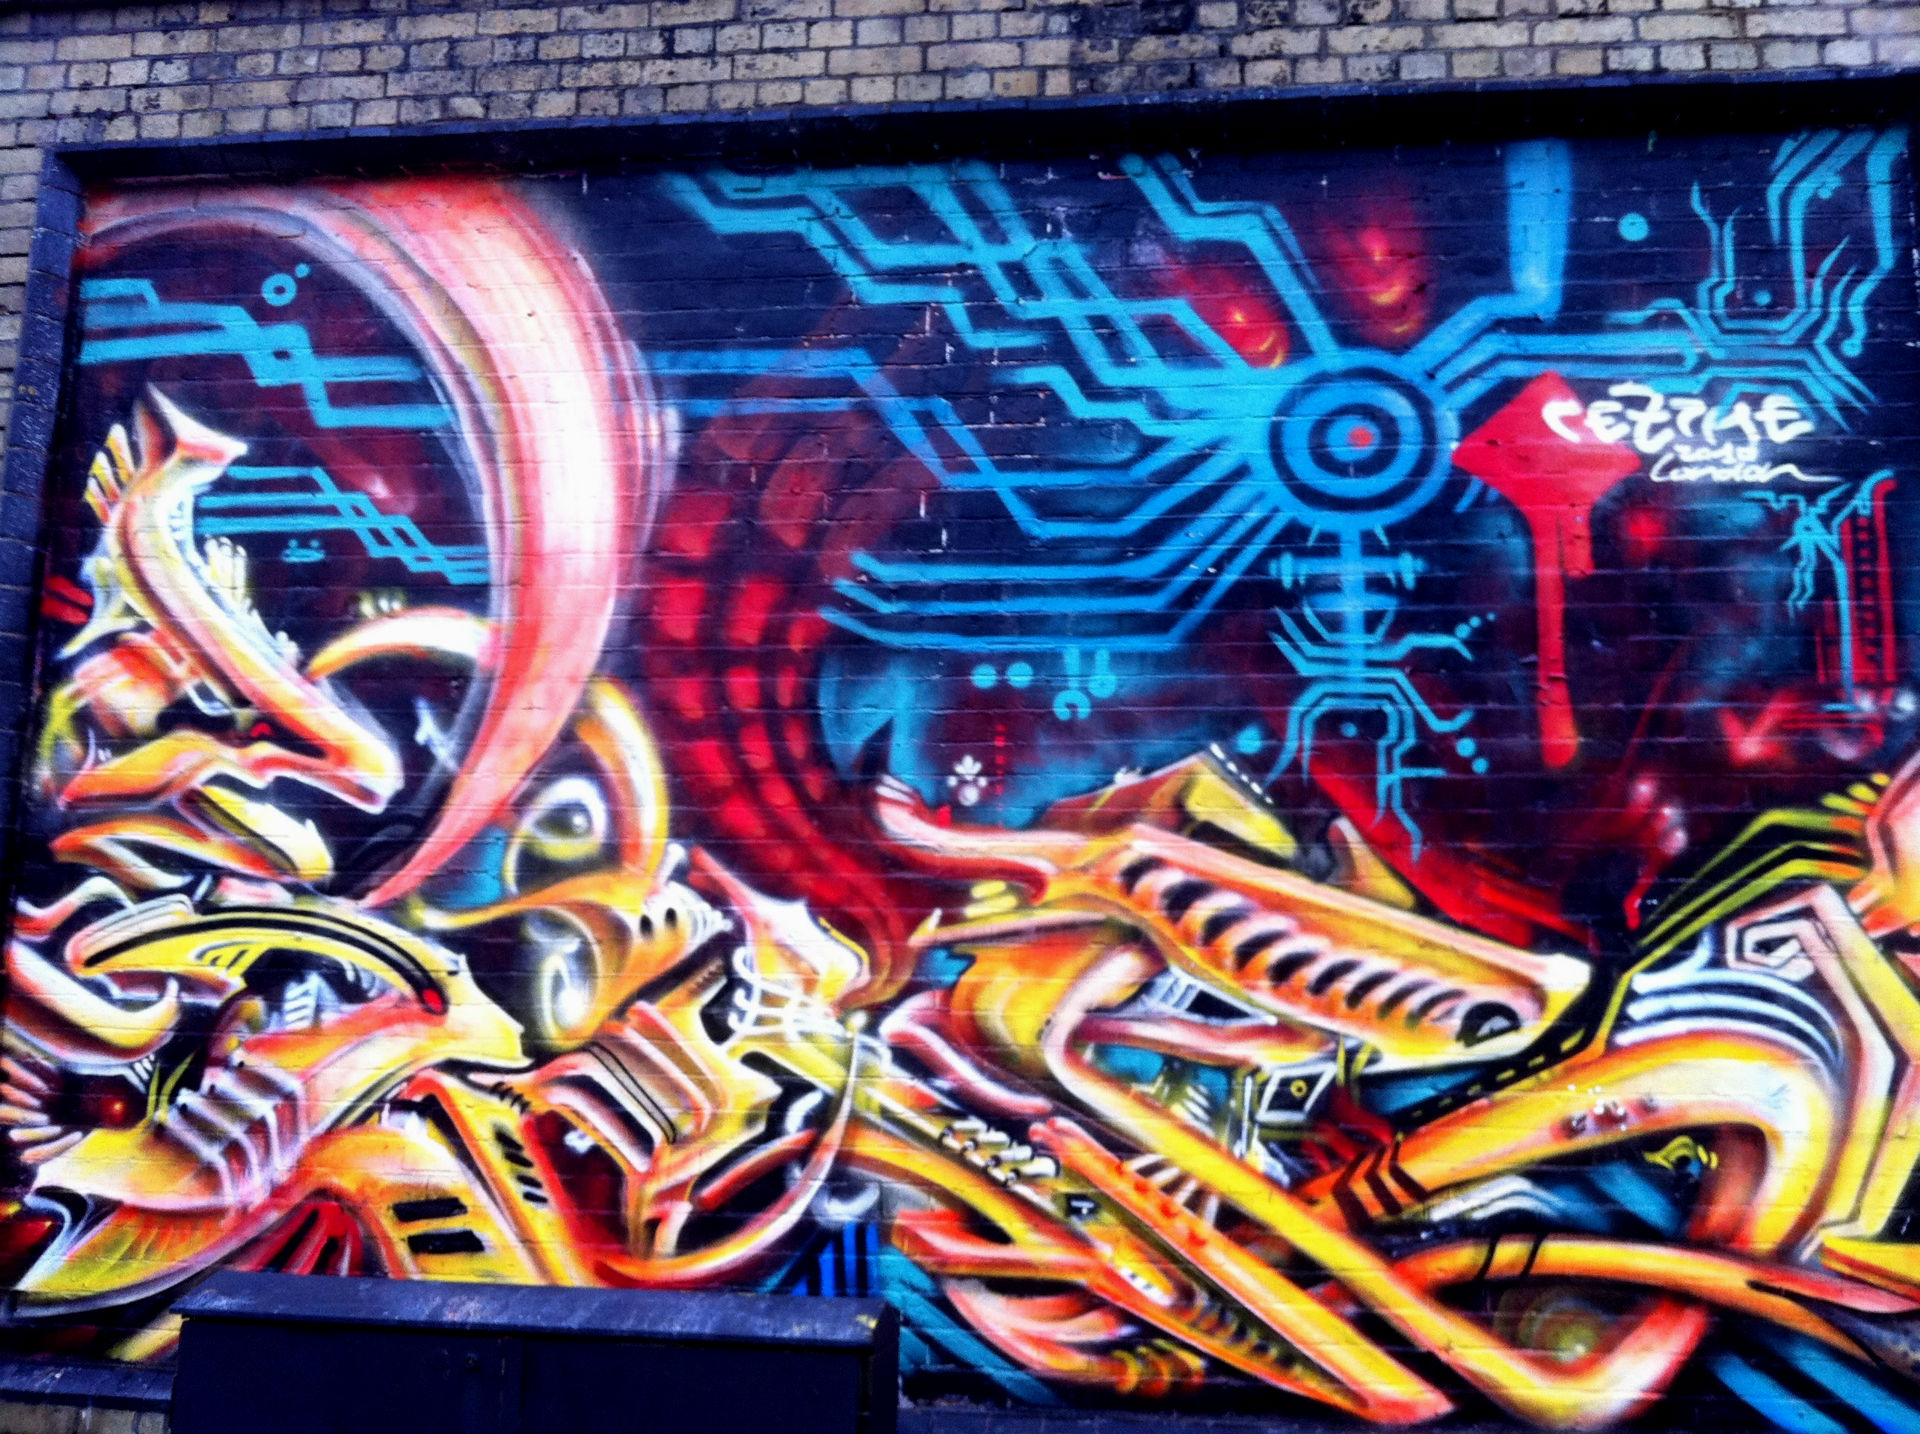 graffiti, artistic, psychedelic, trippy, urban High Definition image